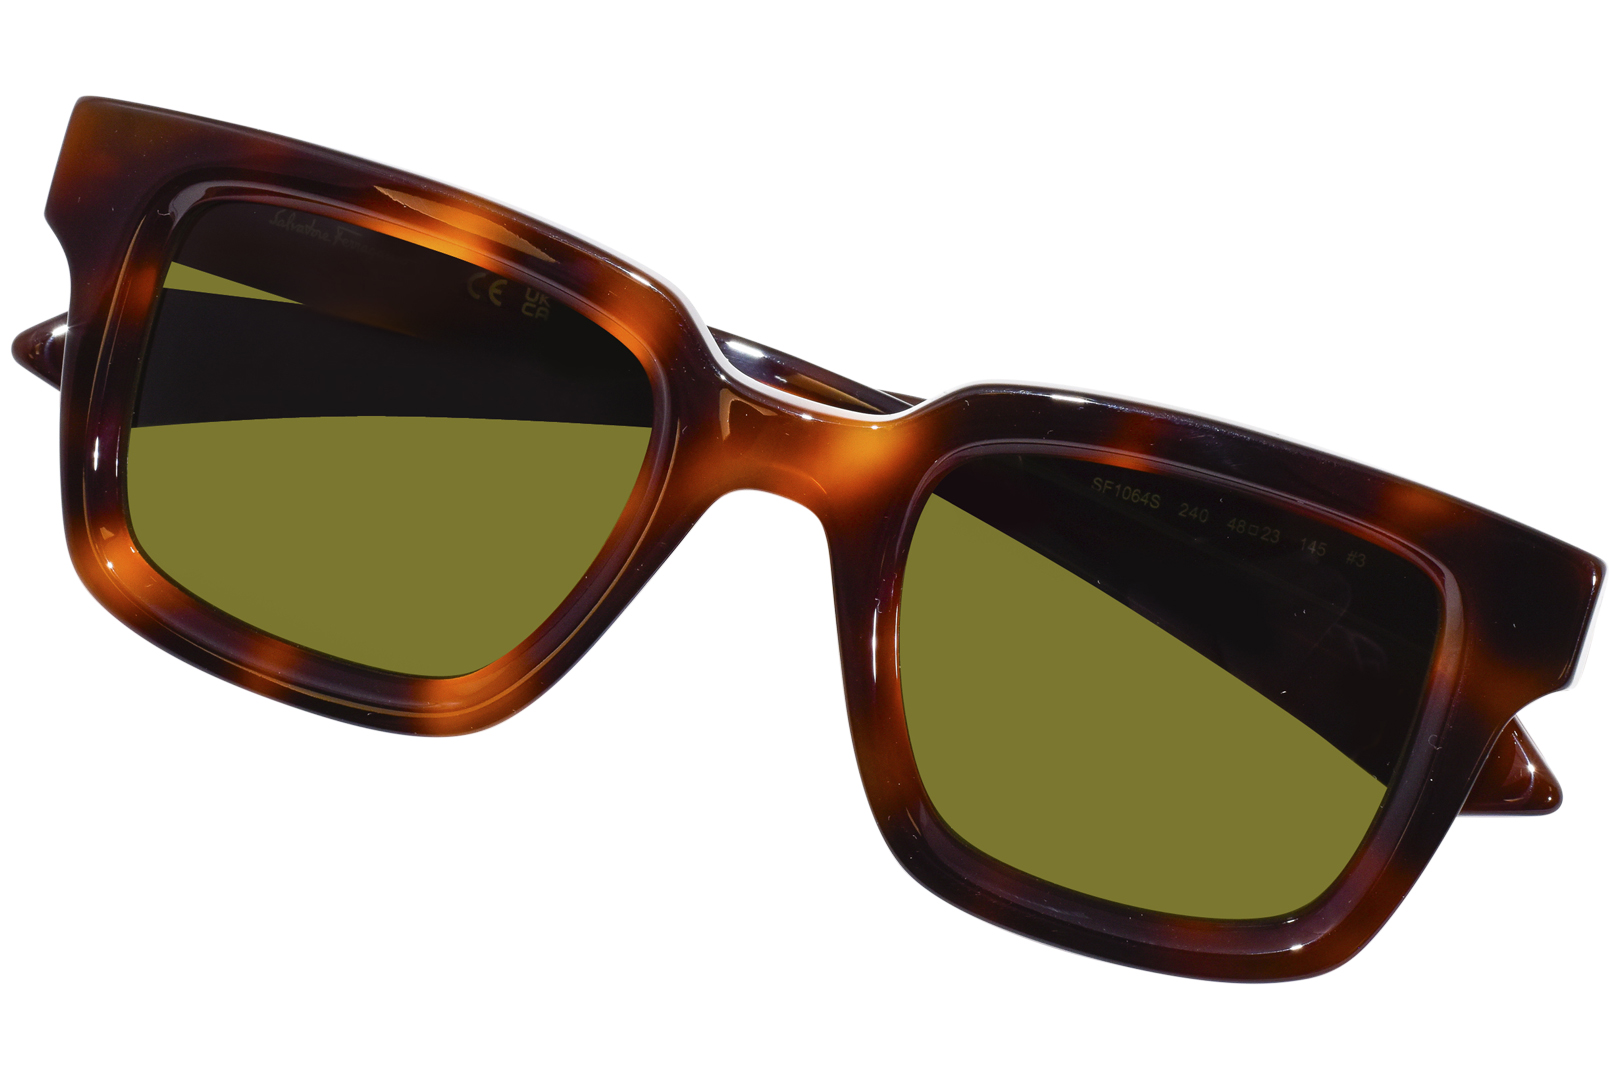 Ferragamo Man Sunglasses Light gold/green